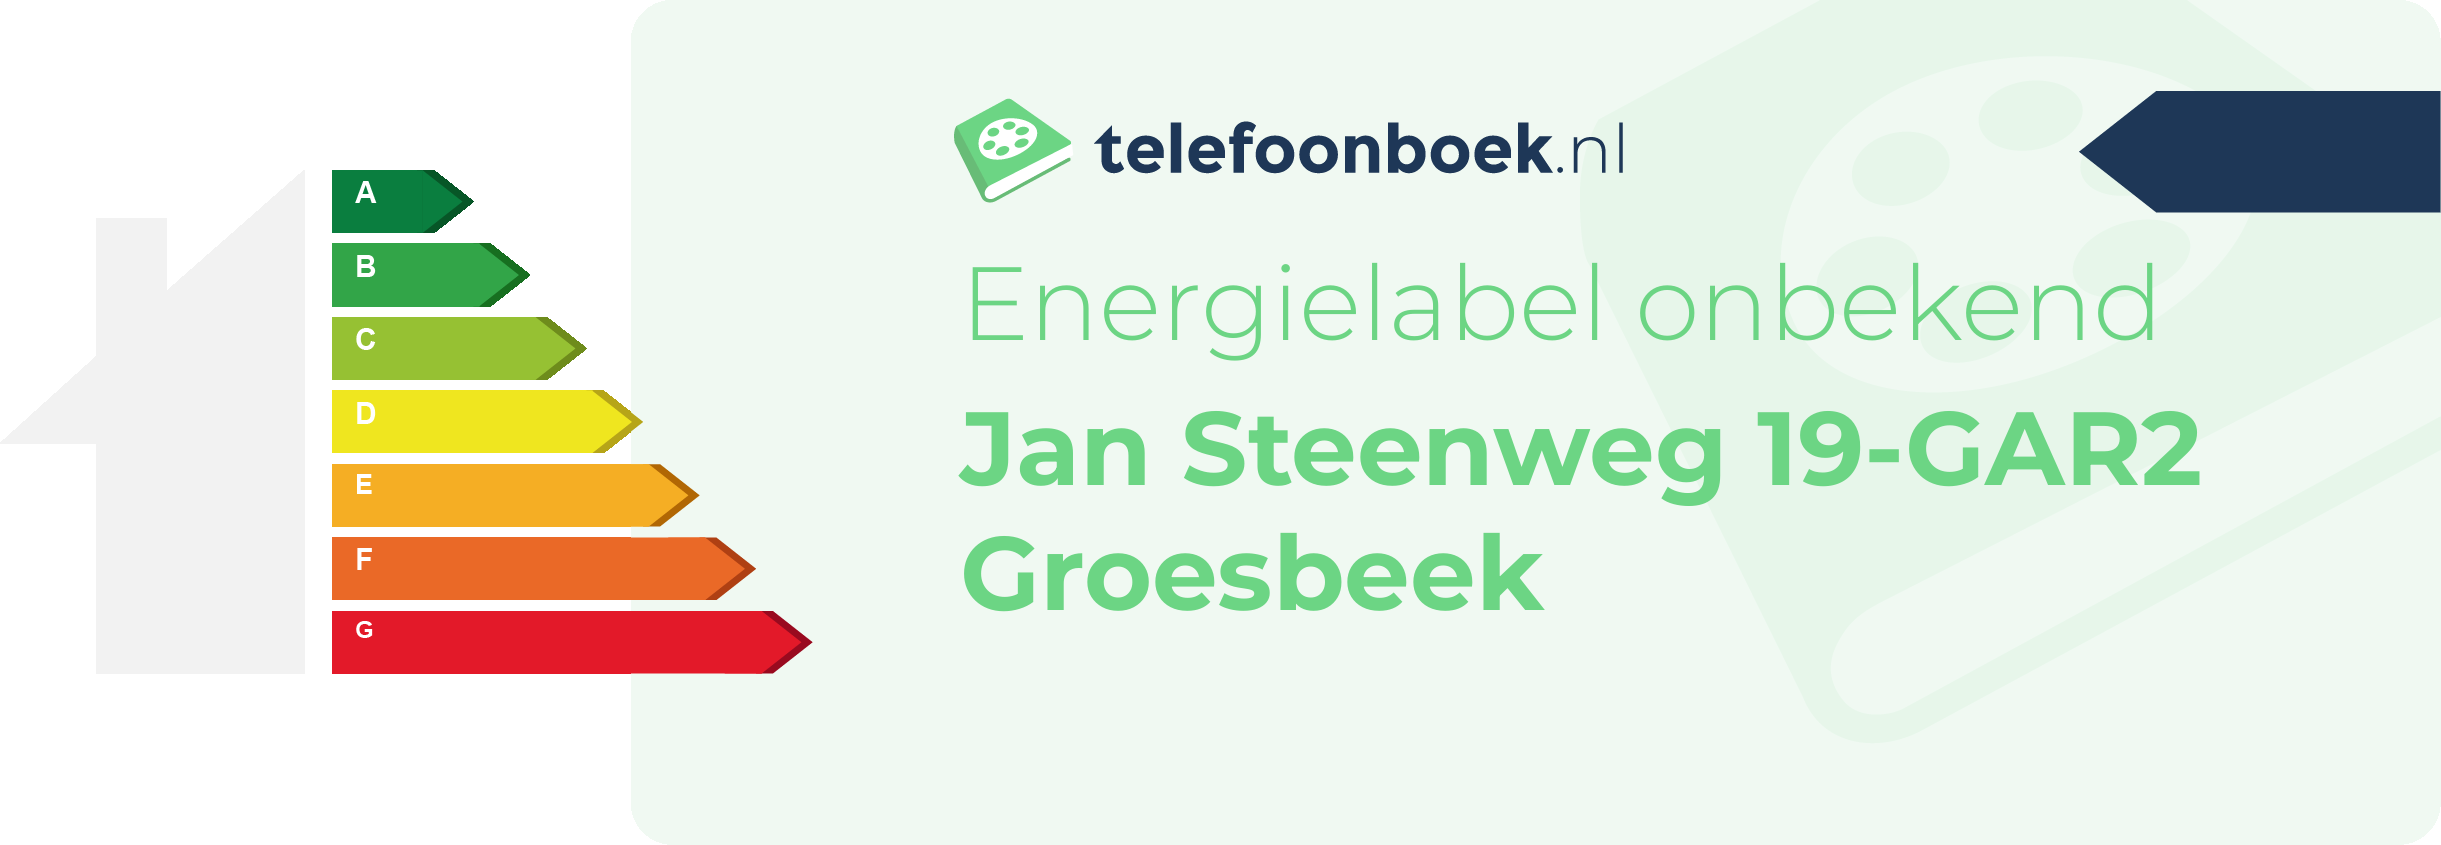 Energielabel Jan Steenweg 19-GAR2 Groesbeek